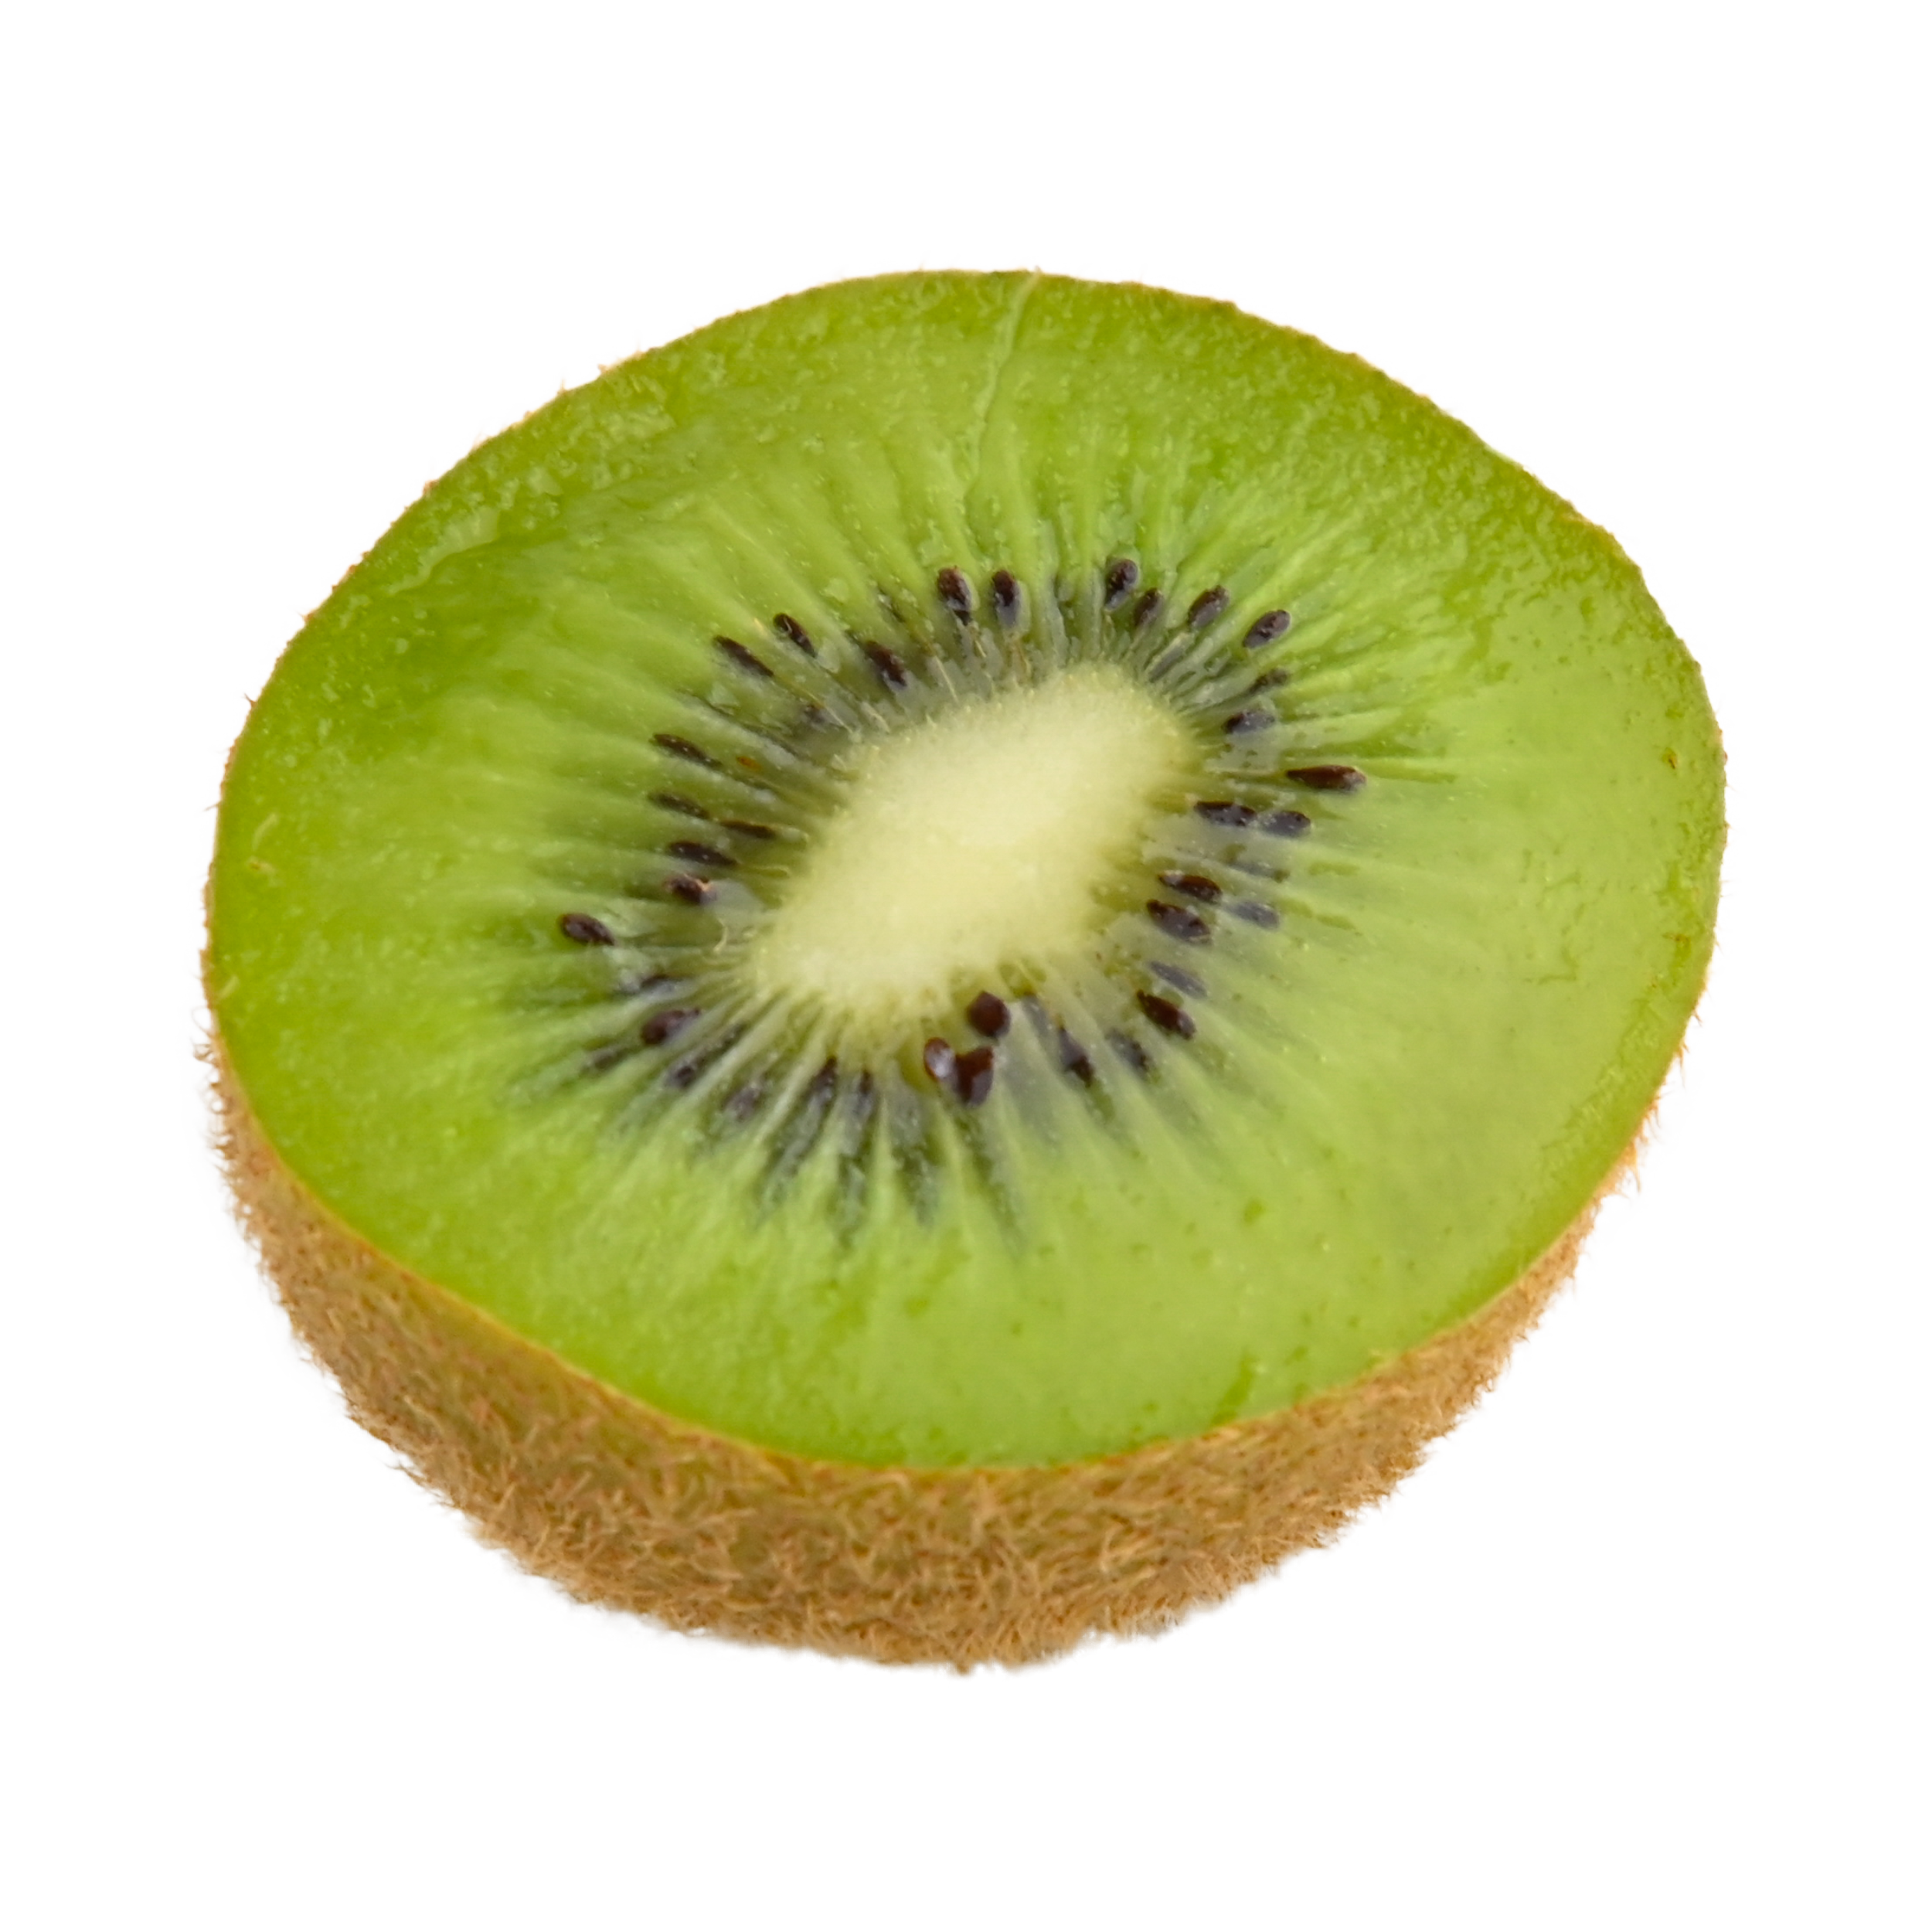 https://laboccajuice.ca/wp-content/uploads/2022/04/—Pngtree—kiwi-tasty-juicy-healthy_6325626.png